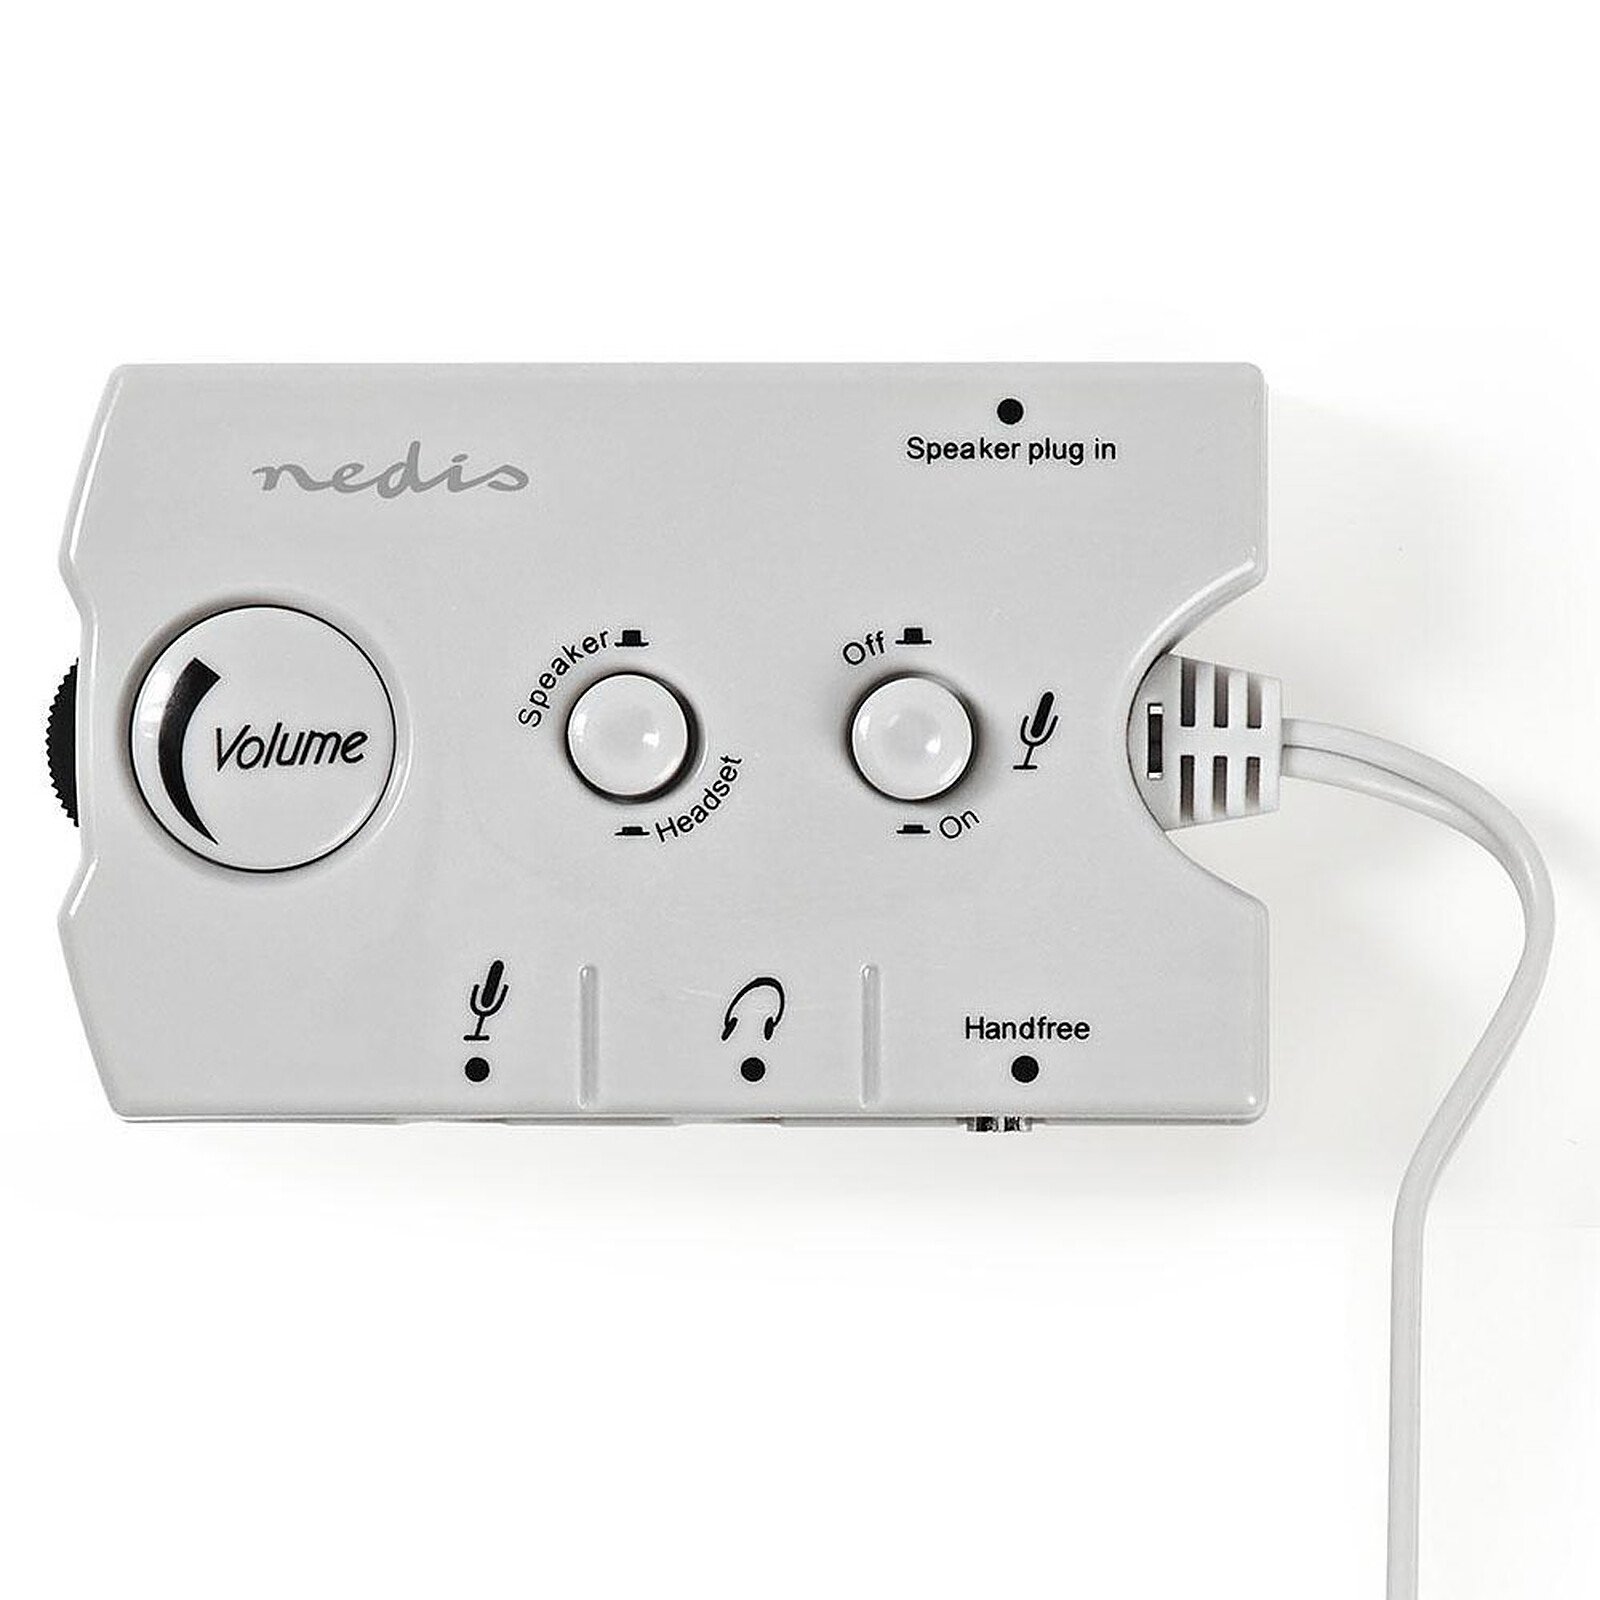 Adaptador de auriculares/micro para puerto Jack de 3,5 mm - Adaptador audio  - LDLC